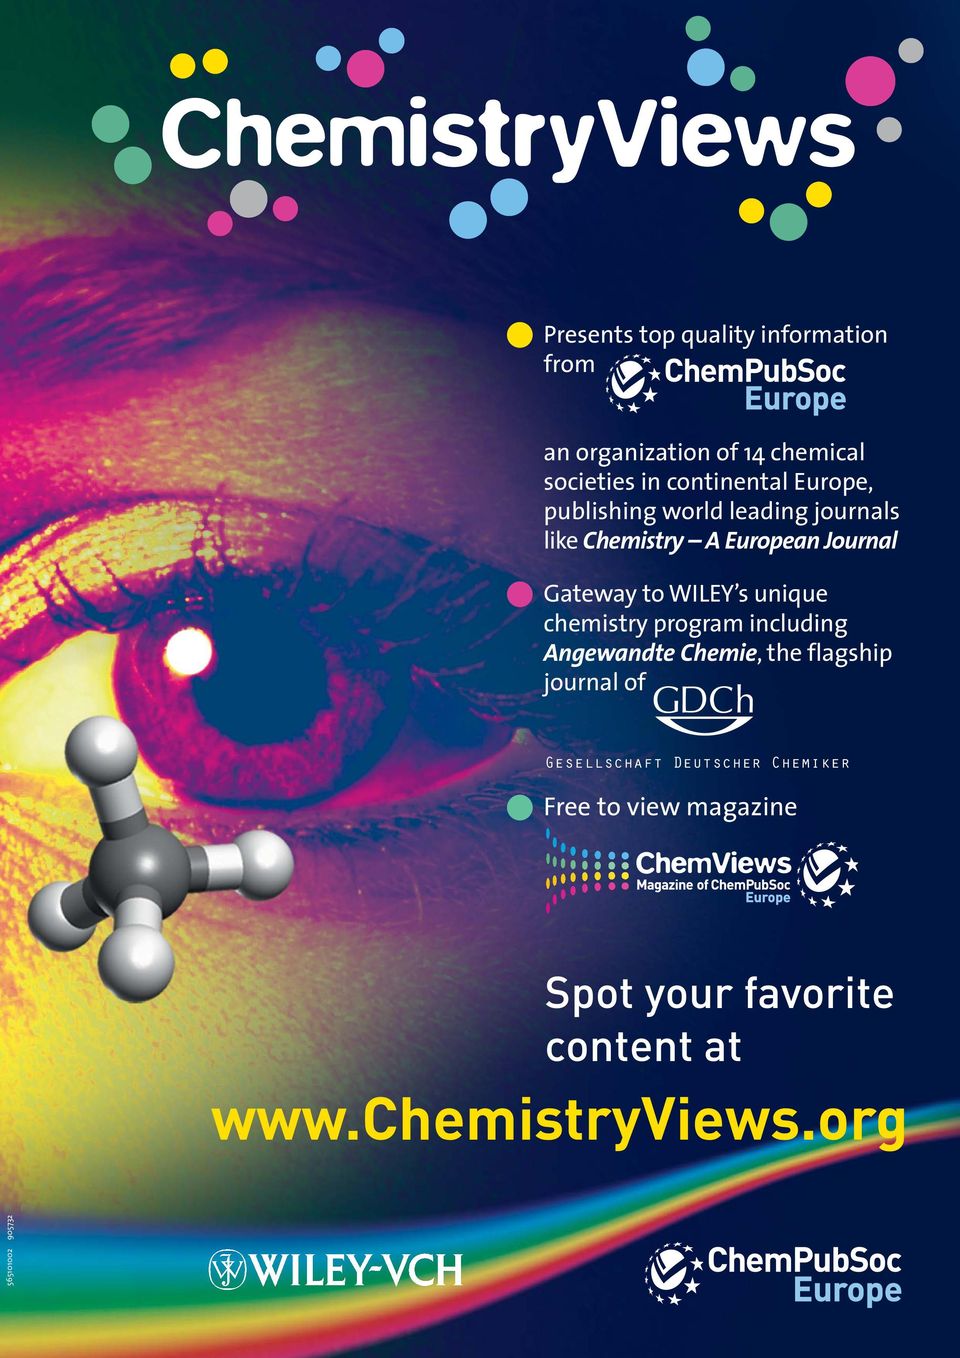 unique chemistry program including Angewandte Chemie, the flagship journal of Gesellschaft